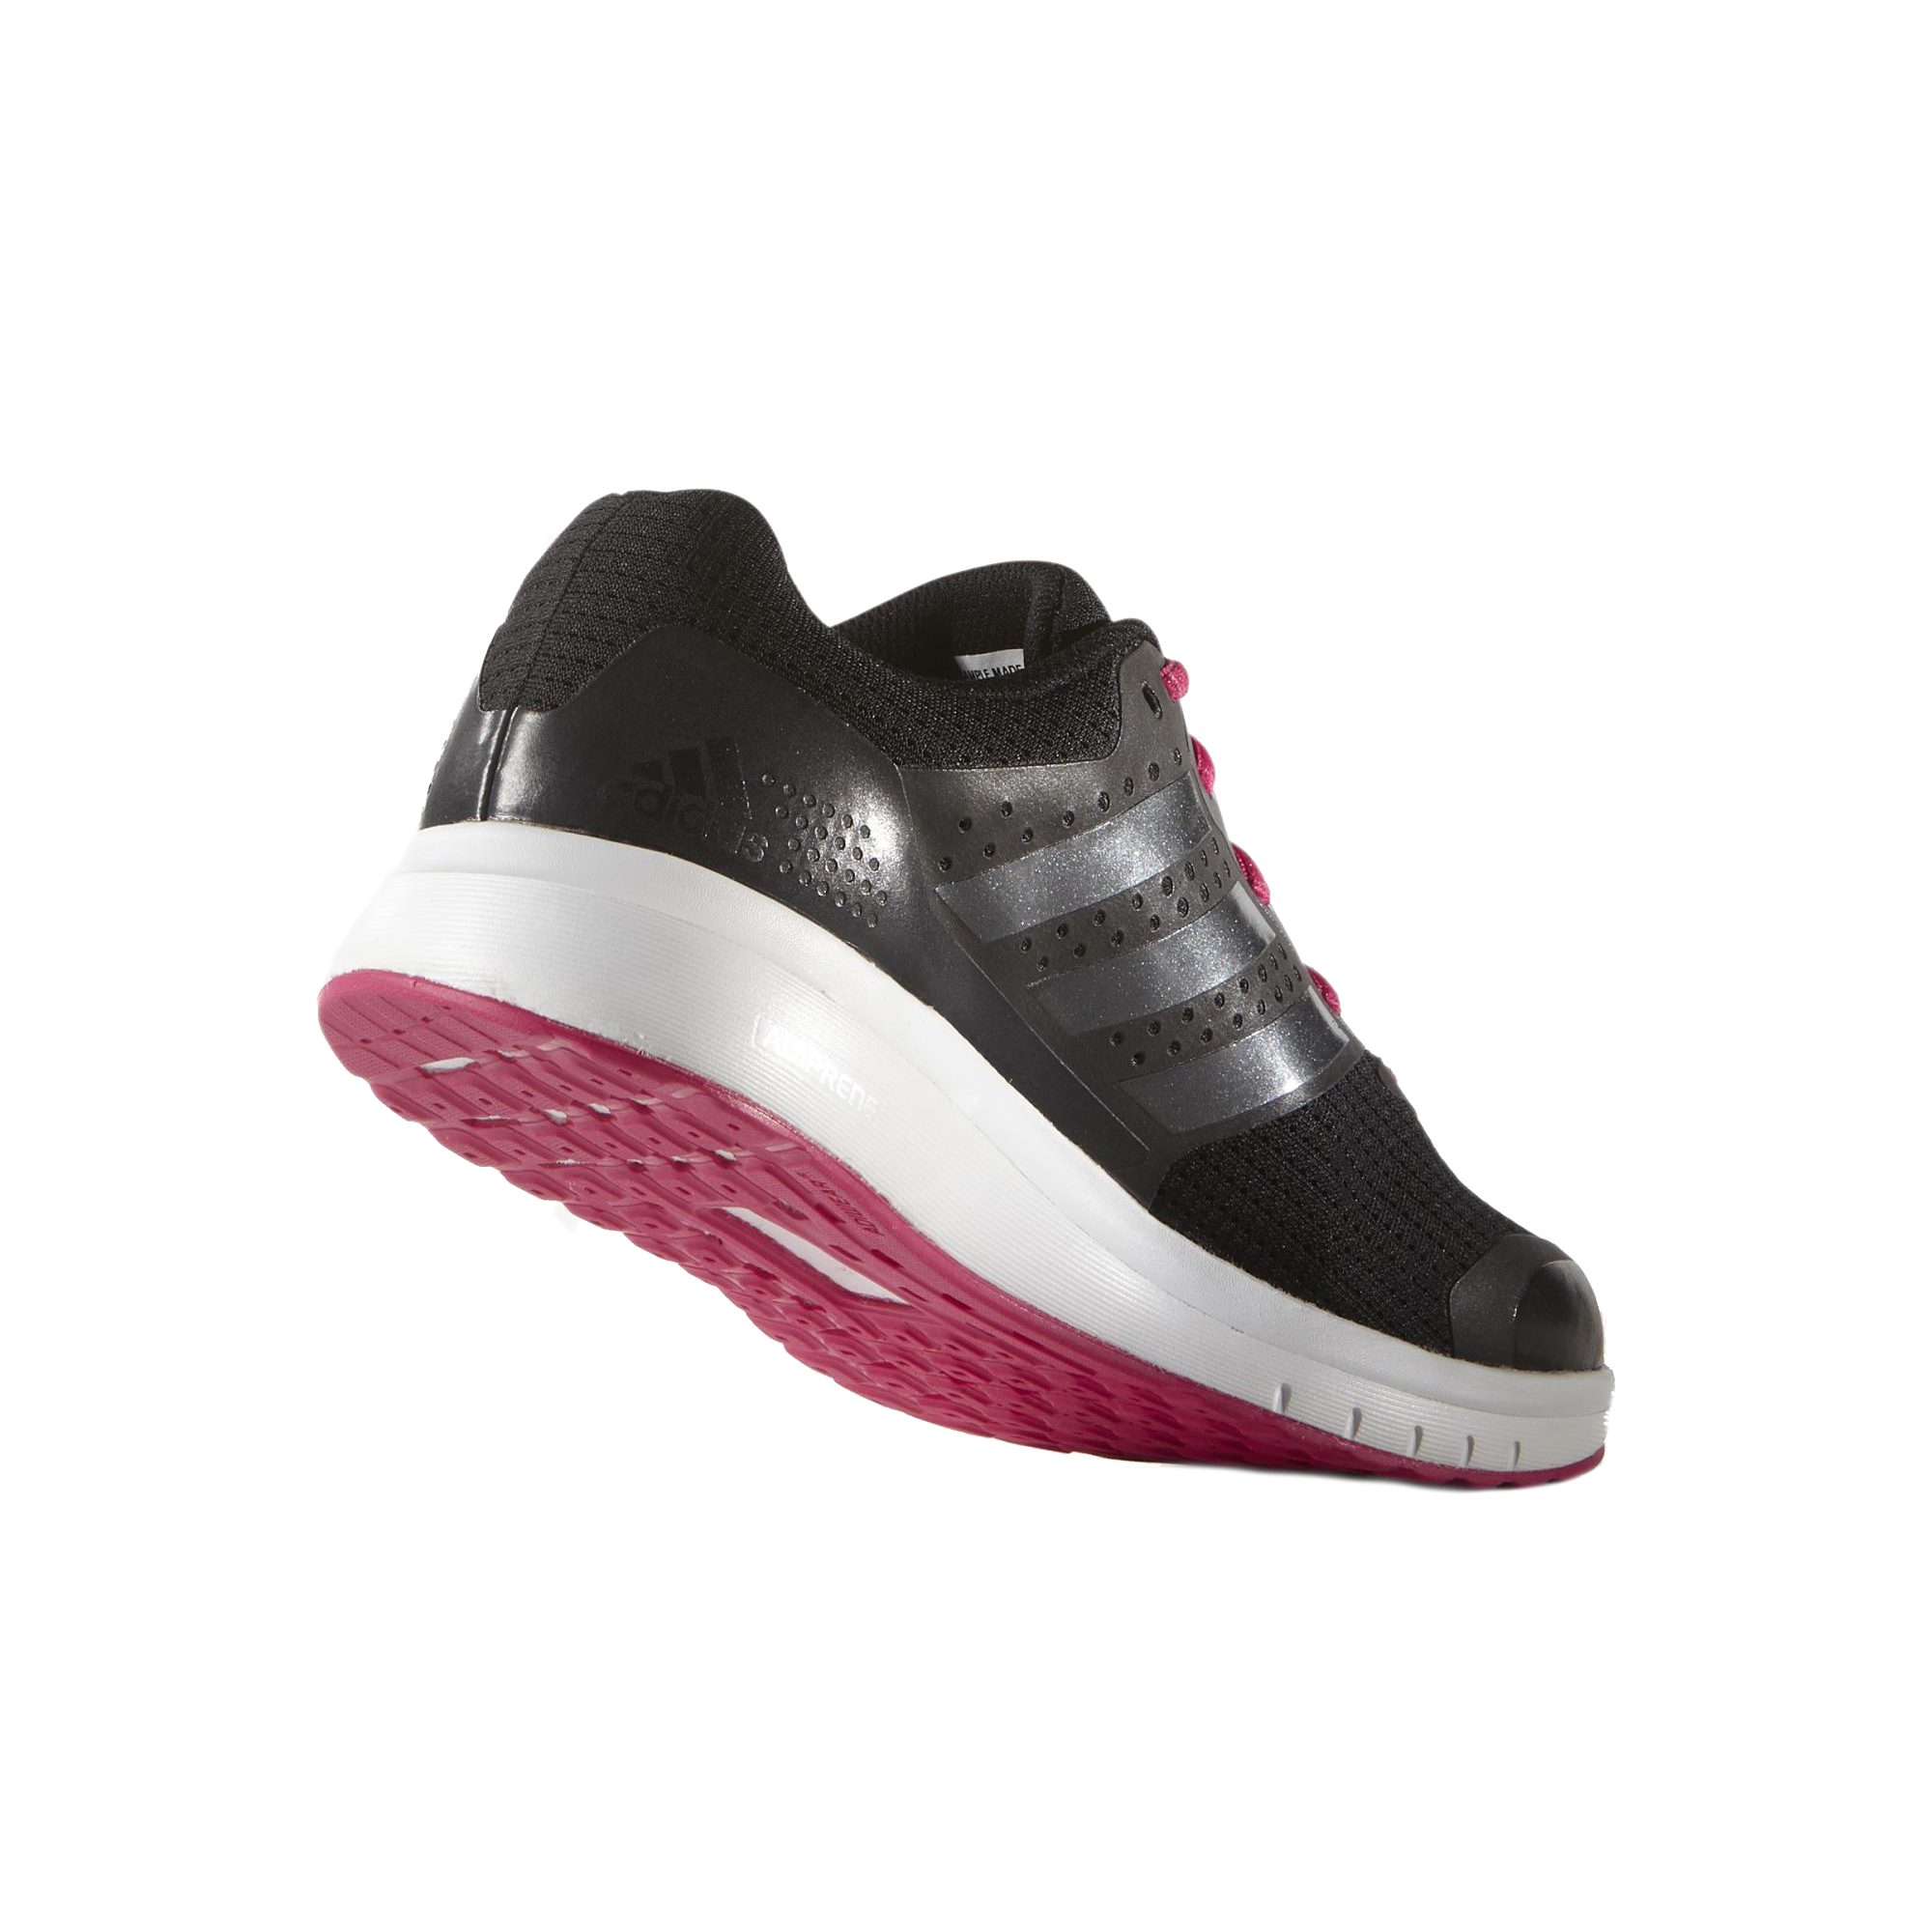 Adidas 7 W (negro/blanco/rosa) manelsanchez.com